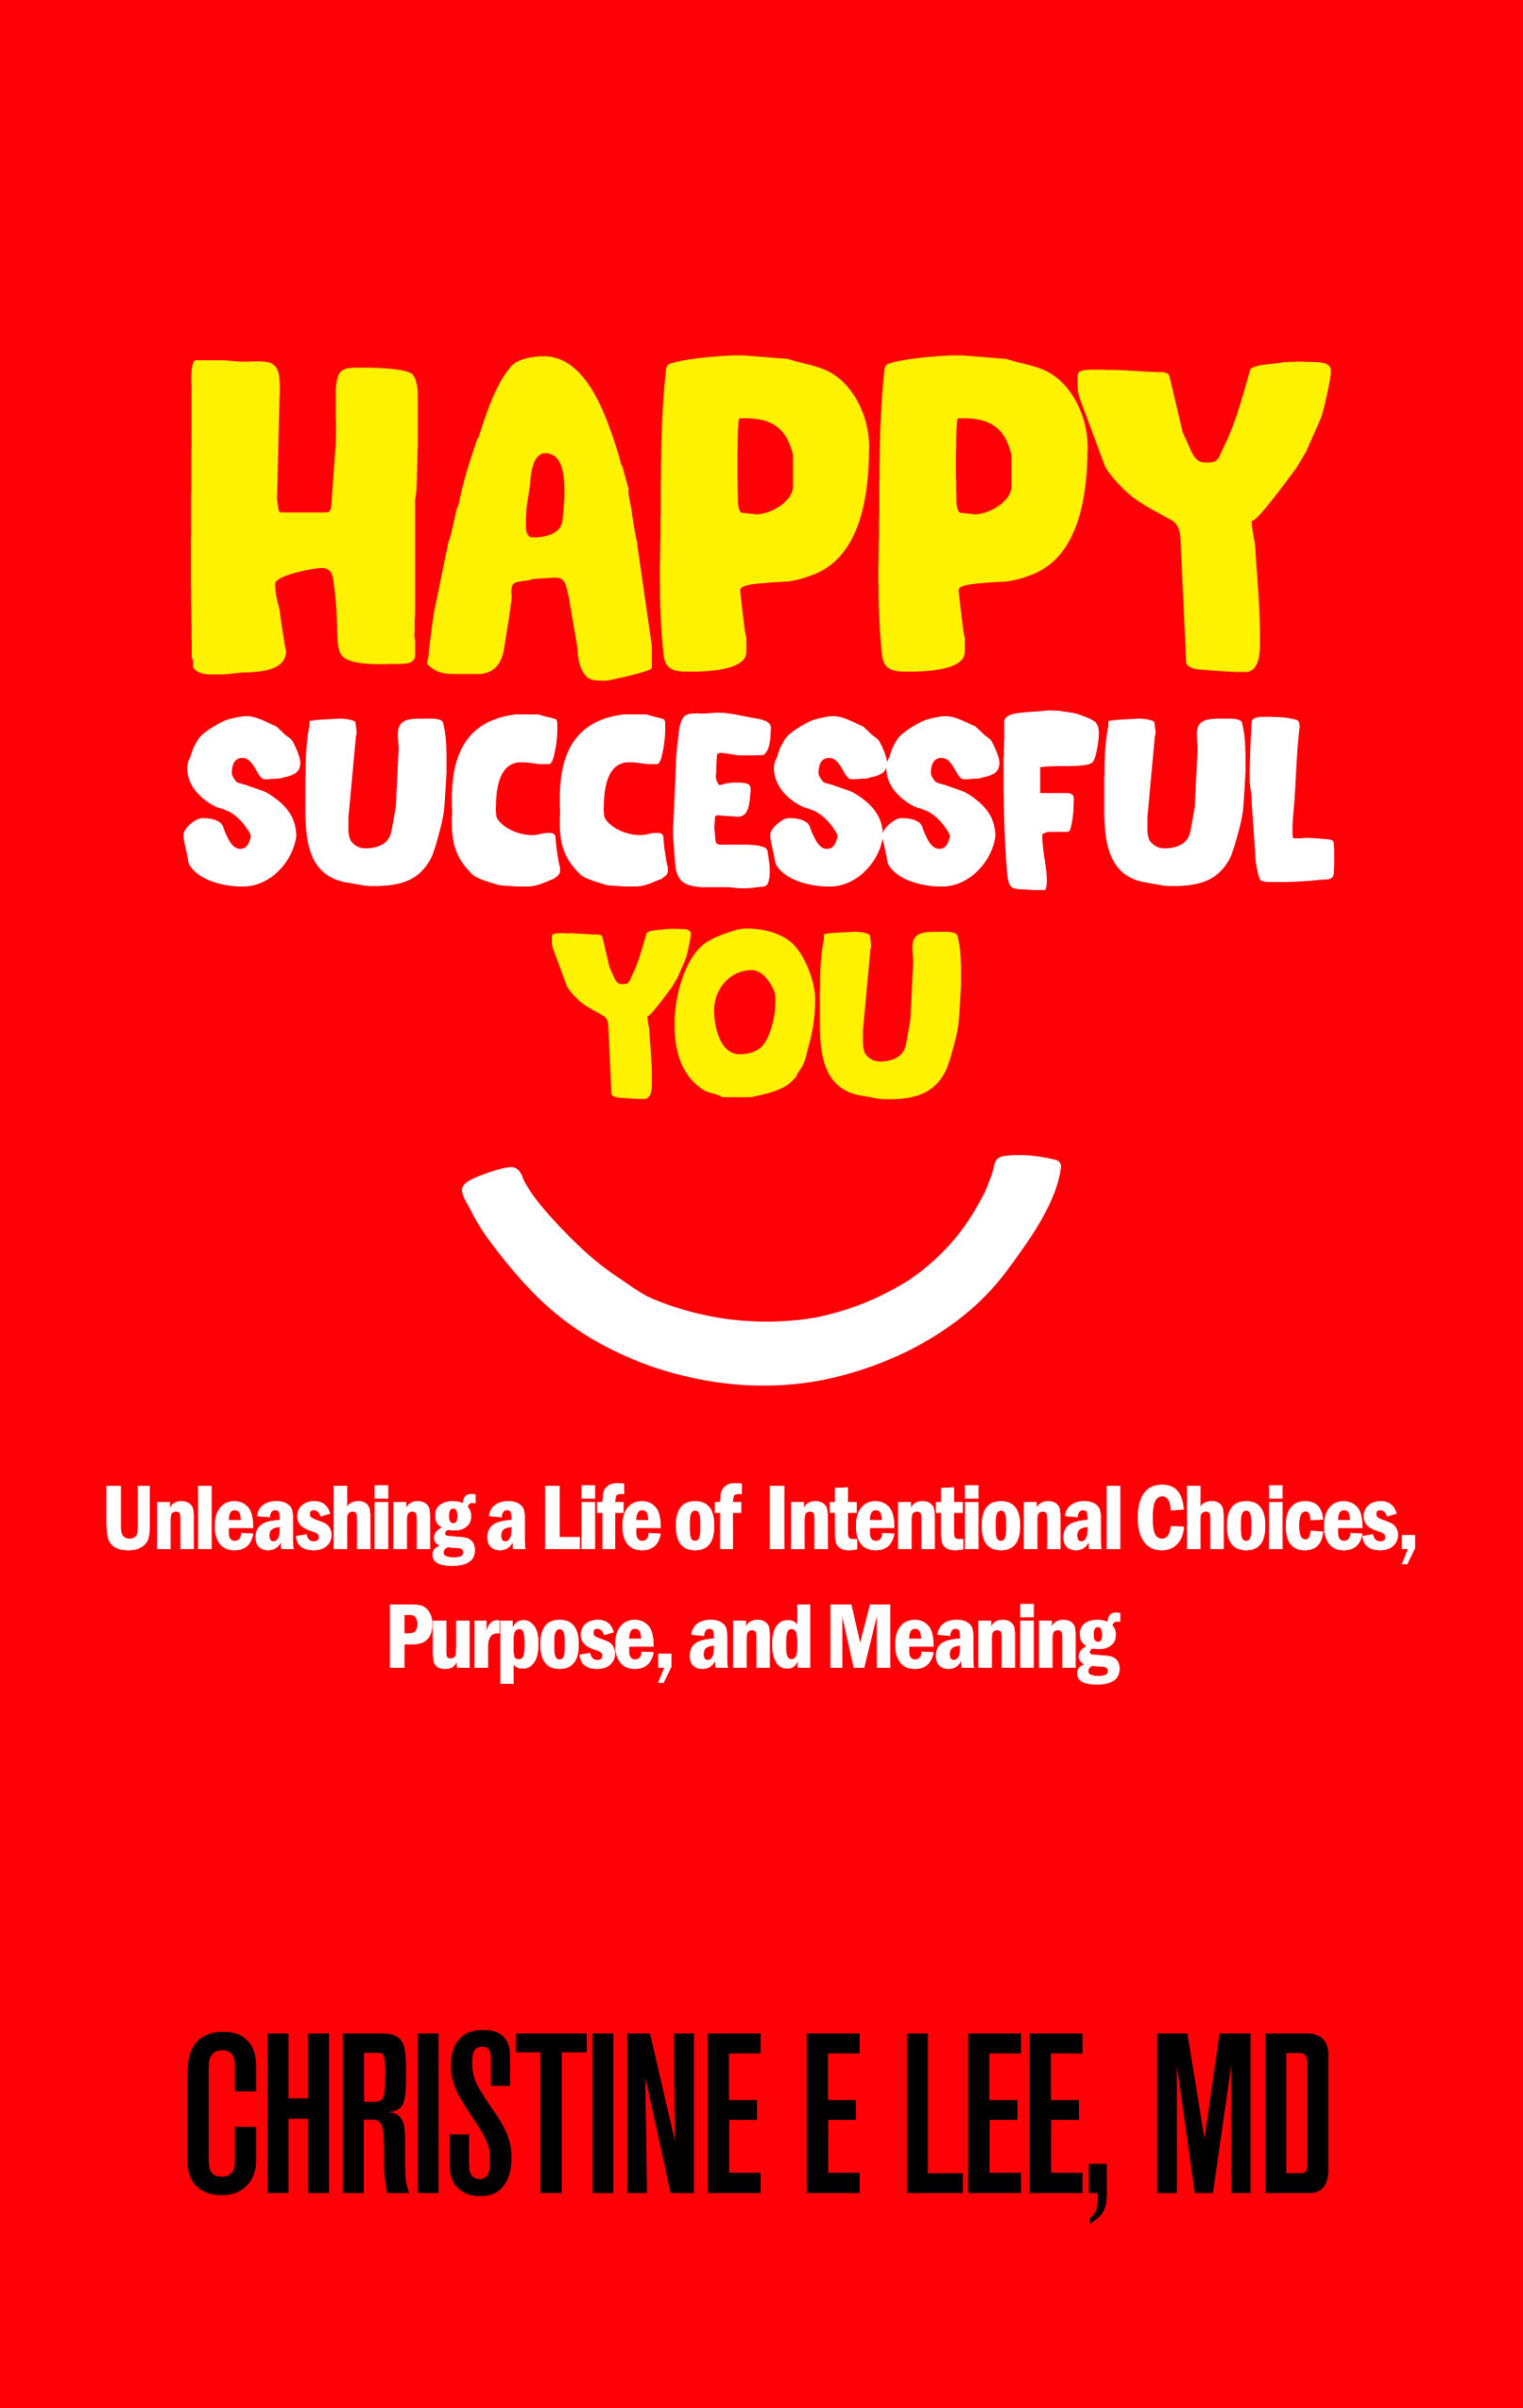 “Happy Successful You”